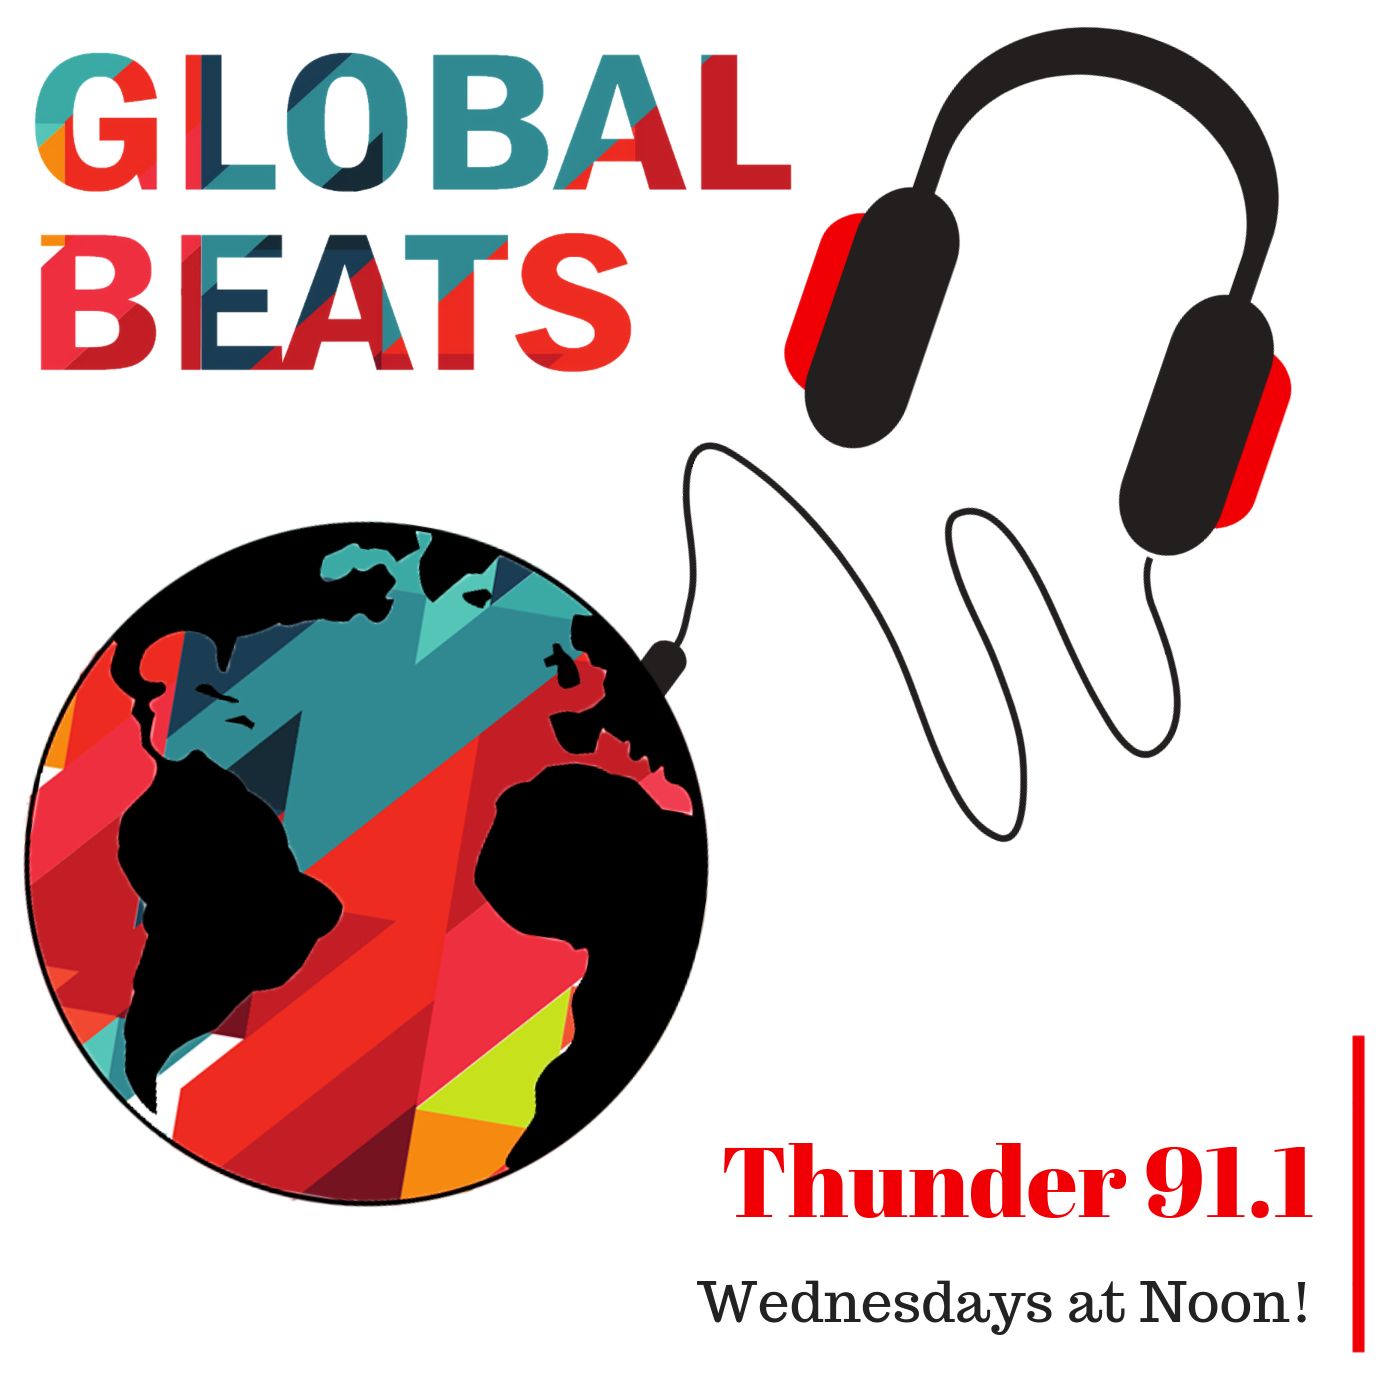 Global Beats